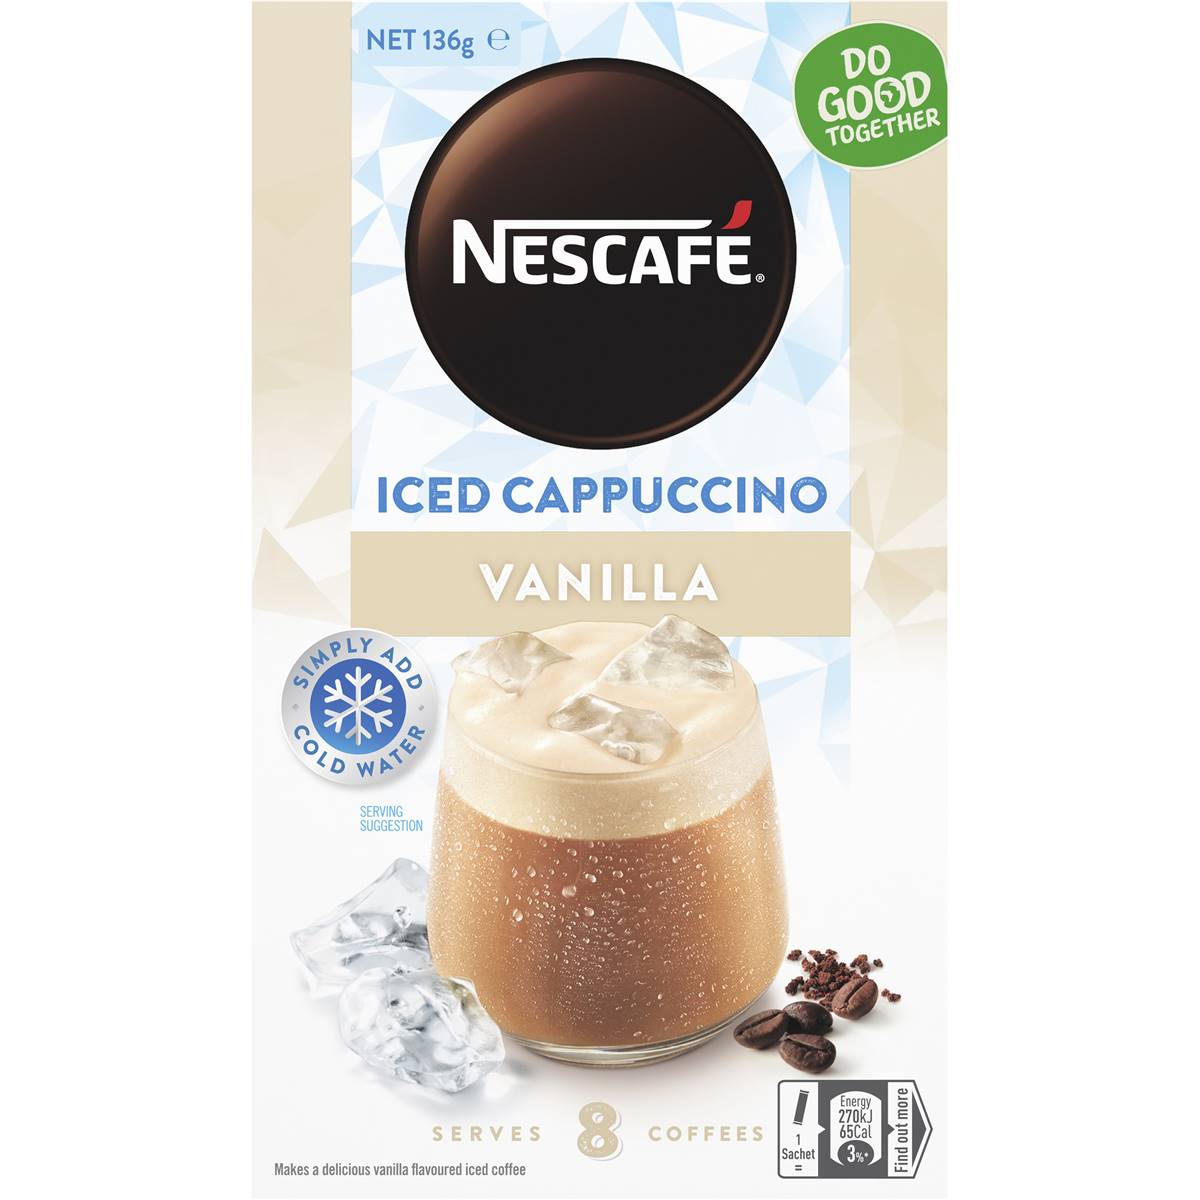 https://www.mustakshif.com/public/uploads/products/nescafe-nescafe-iced-coffee-cappuccino-vanilla-flavour-sachets-8-pack_9300605143982_Mustakshif.jpg